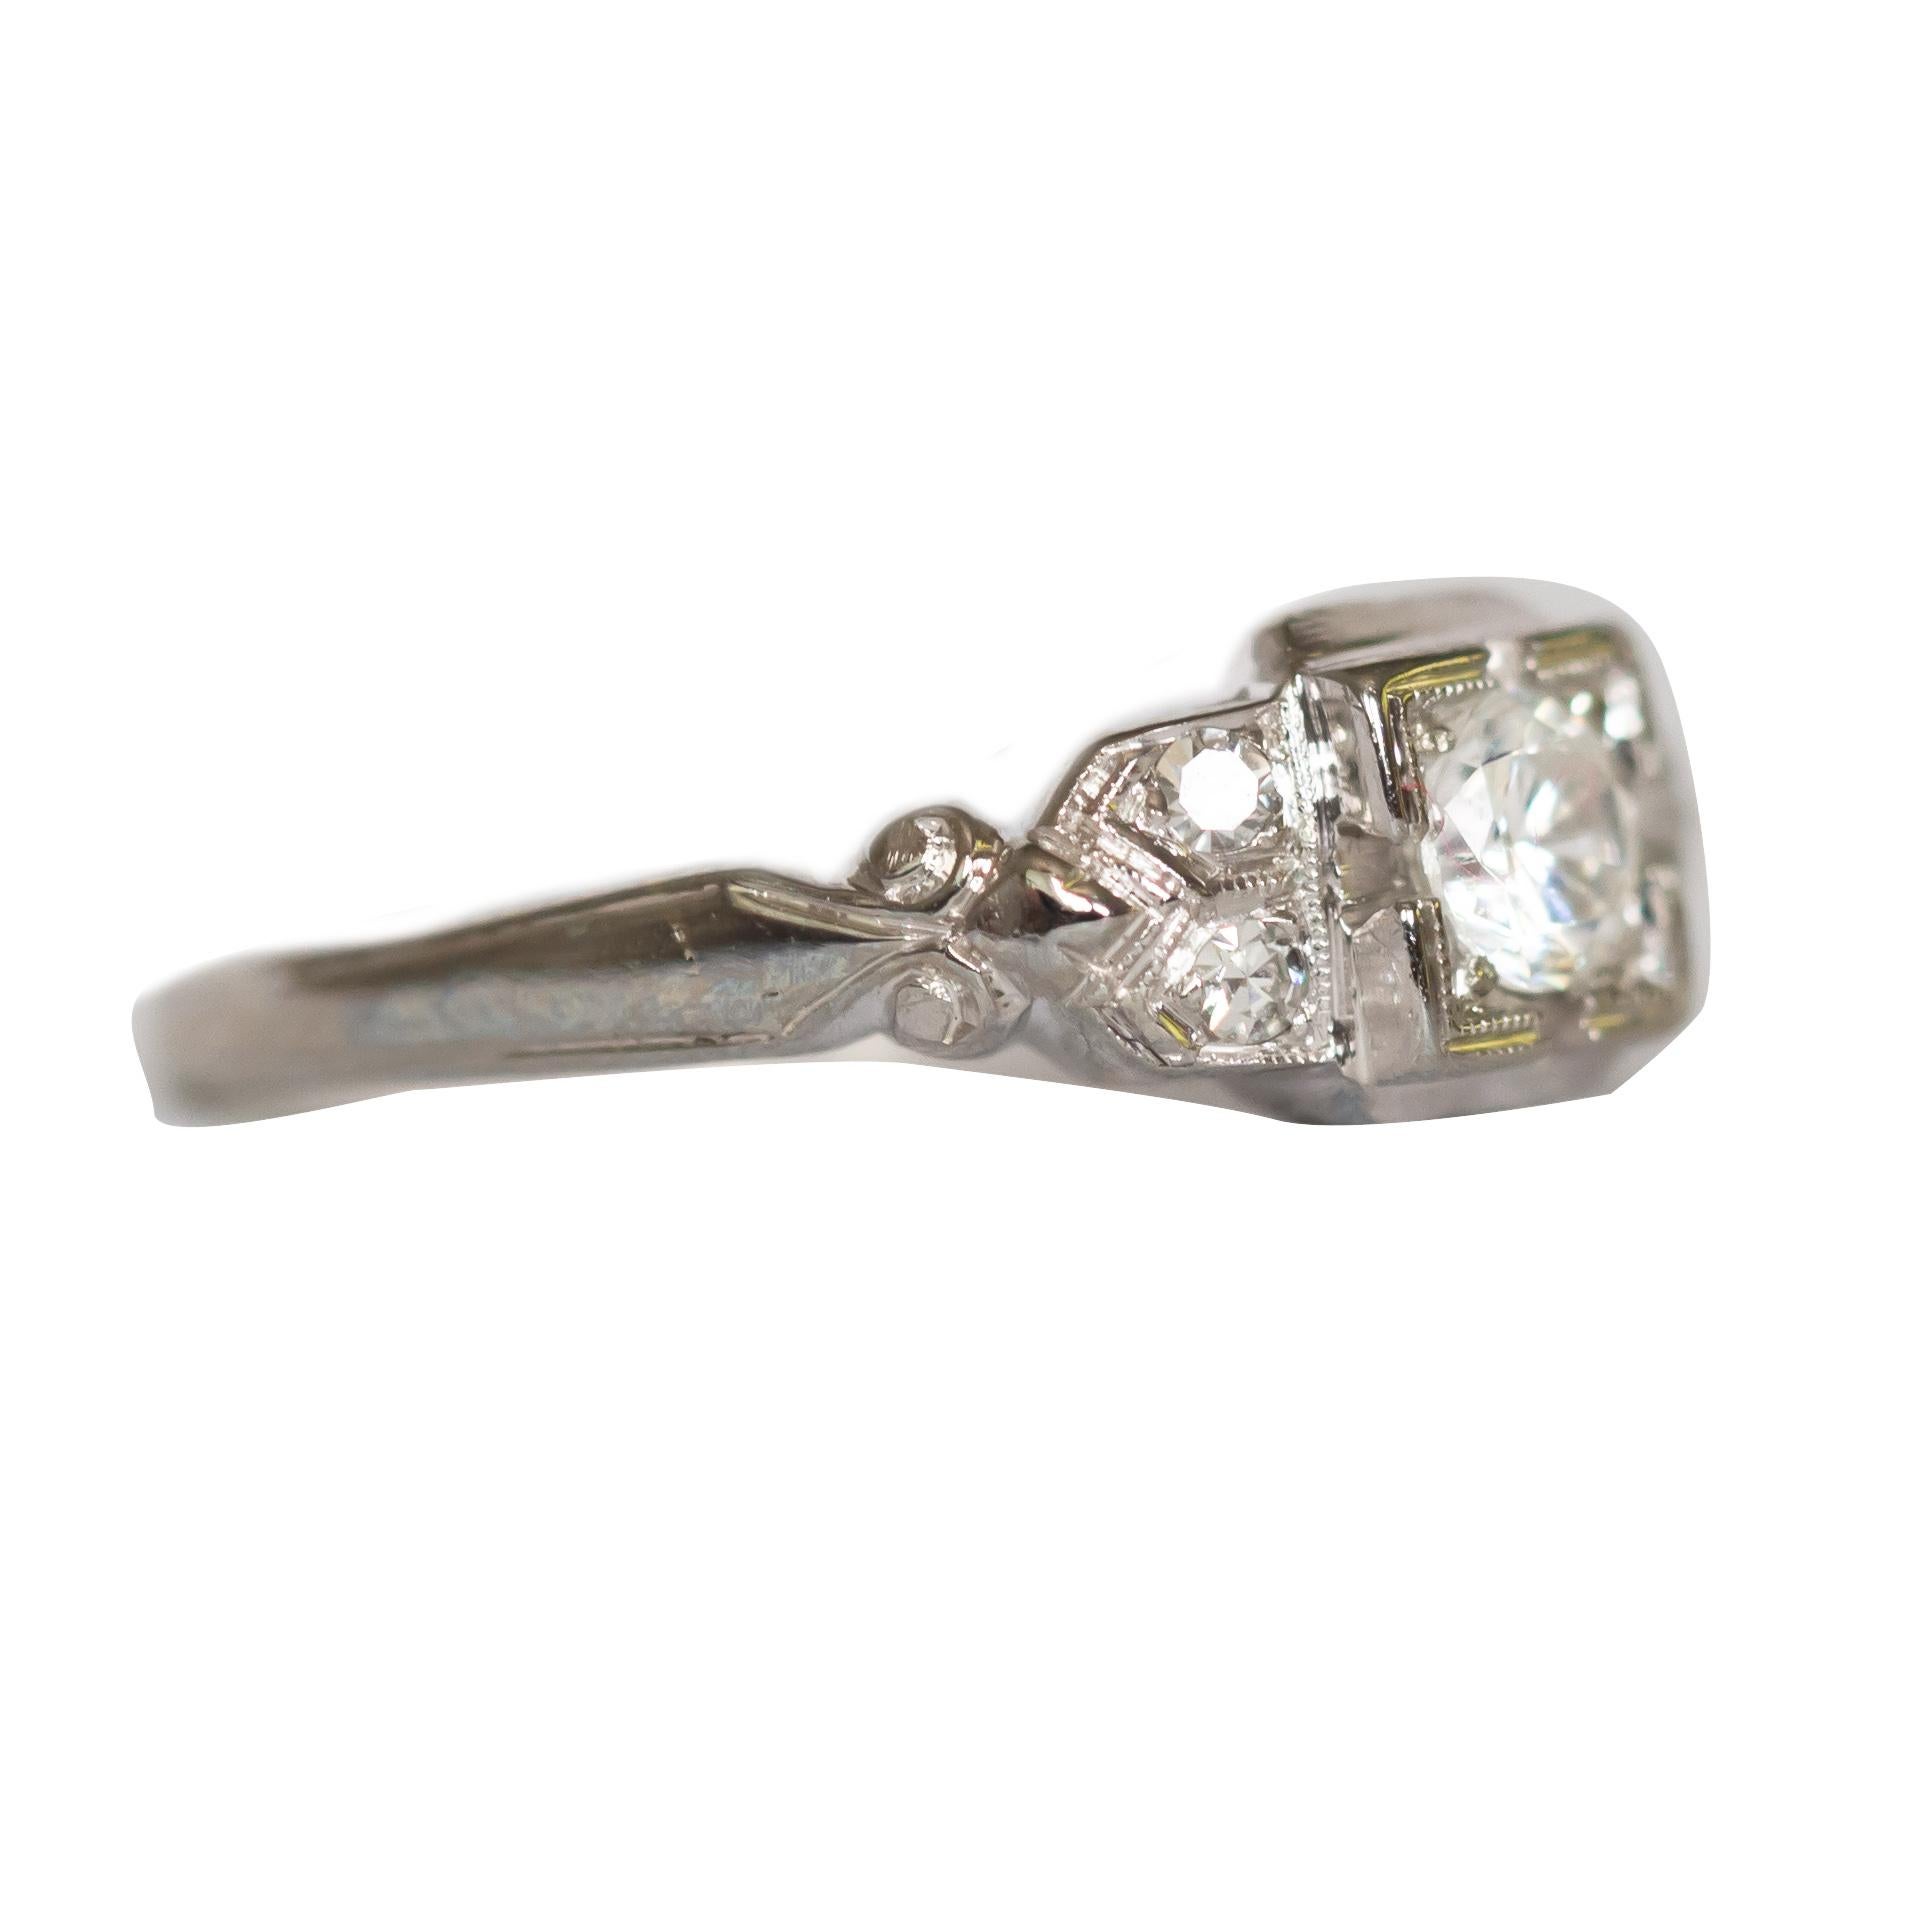 42 carat diamond ring